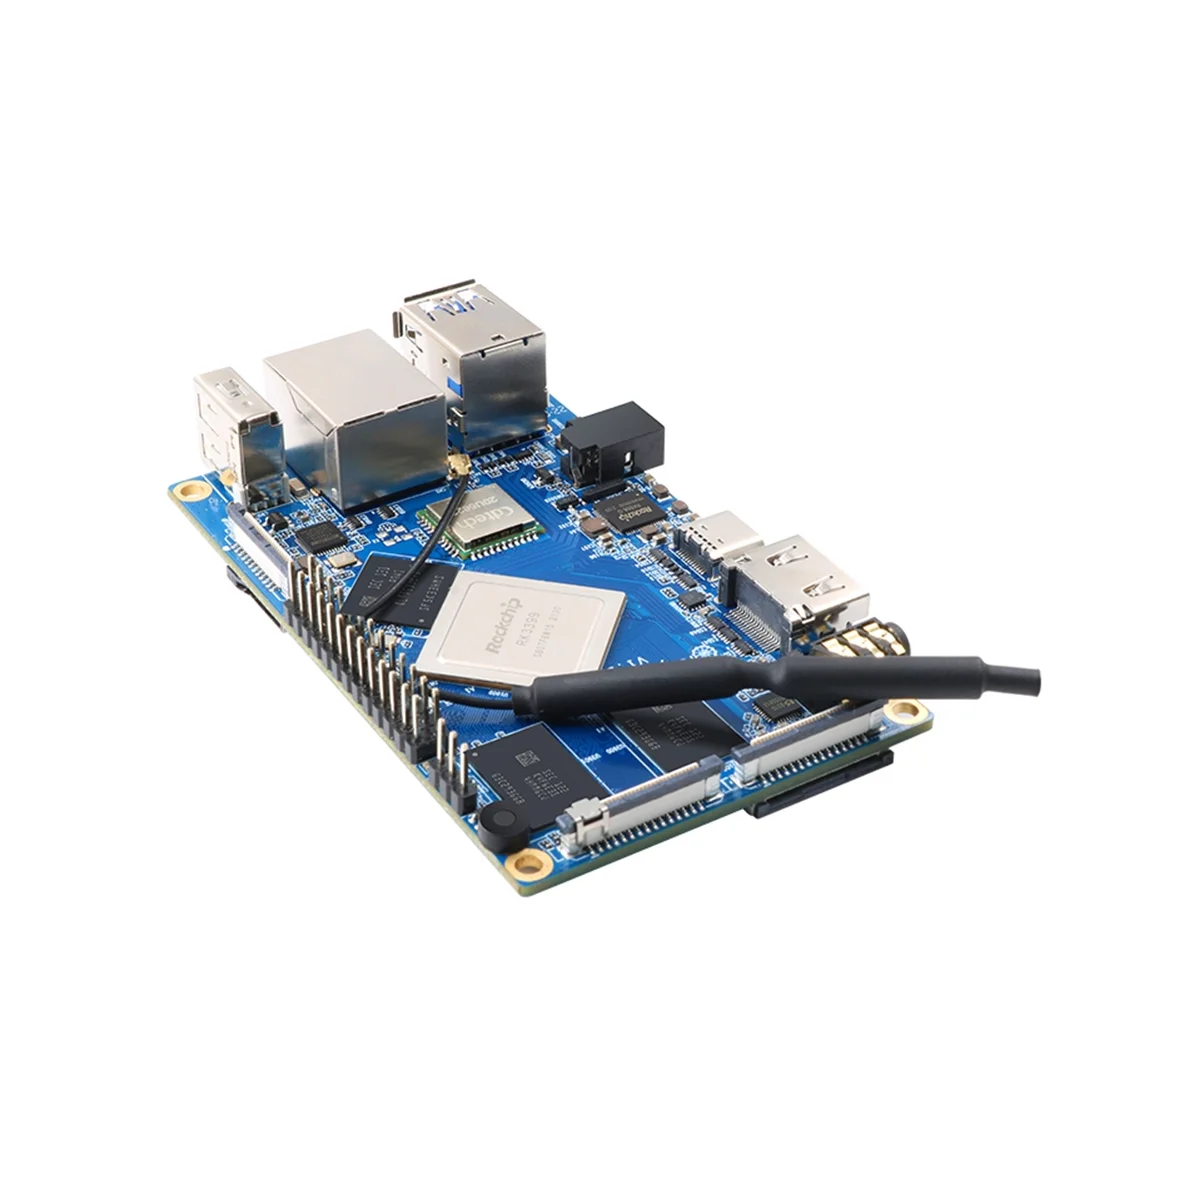 

For Orange 4 4GB+Aluminum Case Rockchip RK3399 16GB EMMC Development Board Gigabit Ethernet for Android/